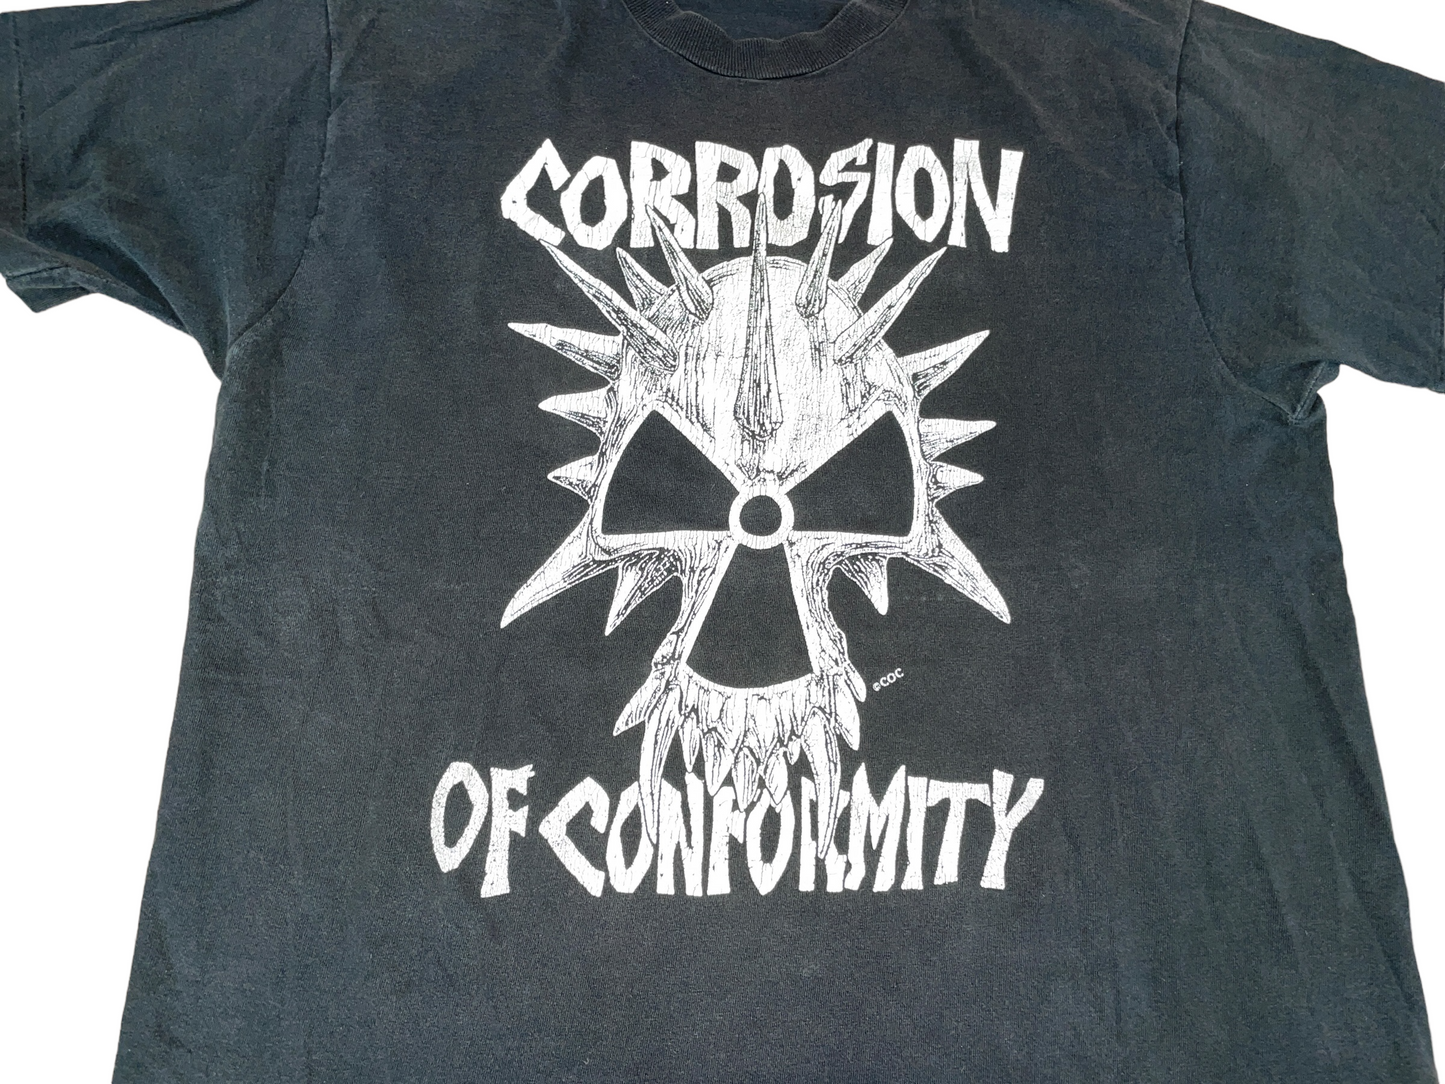 Vintage 90's Corrosion of Conformity Tour T-Shirt